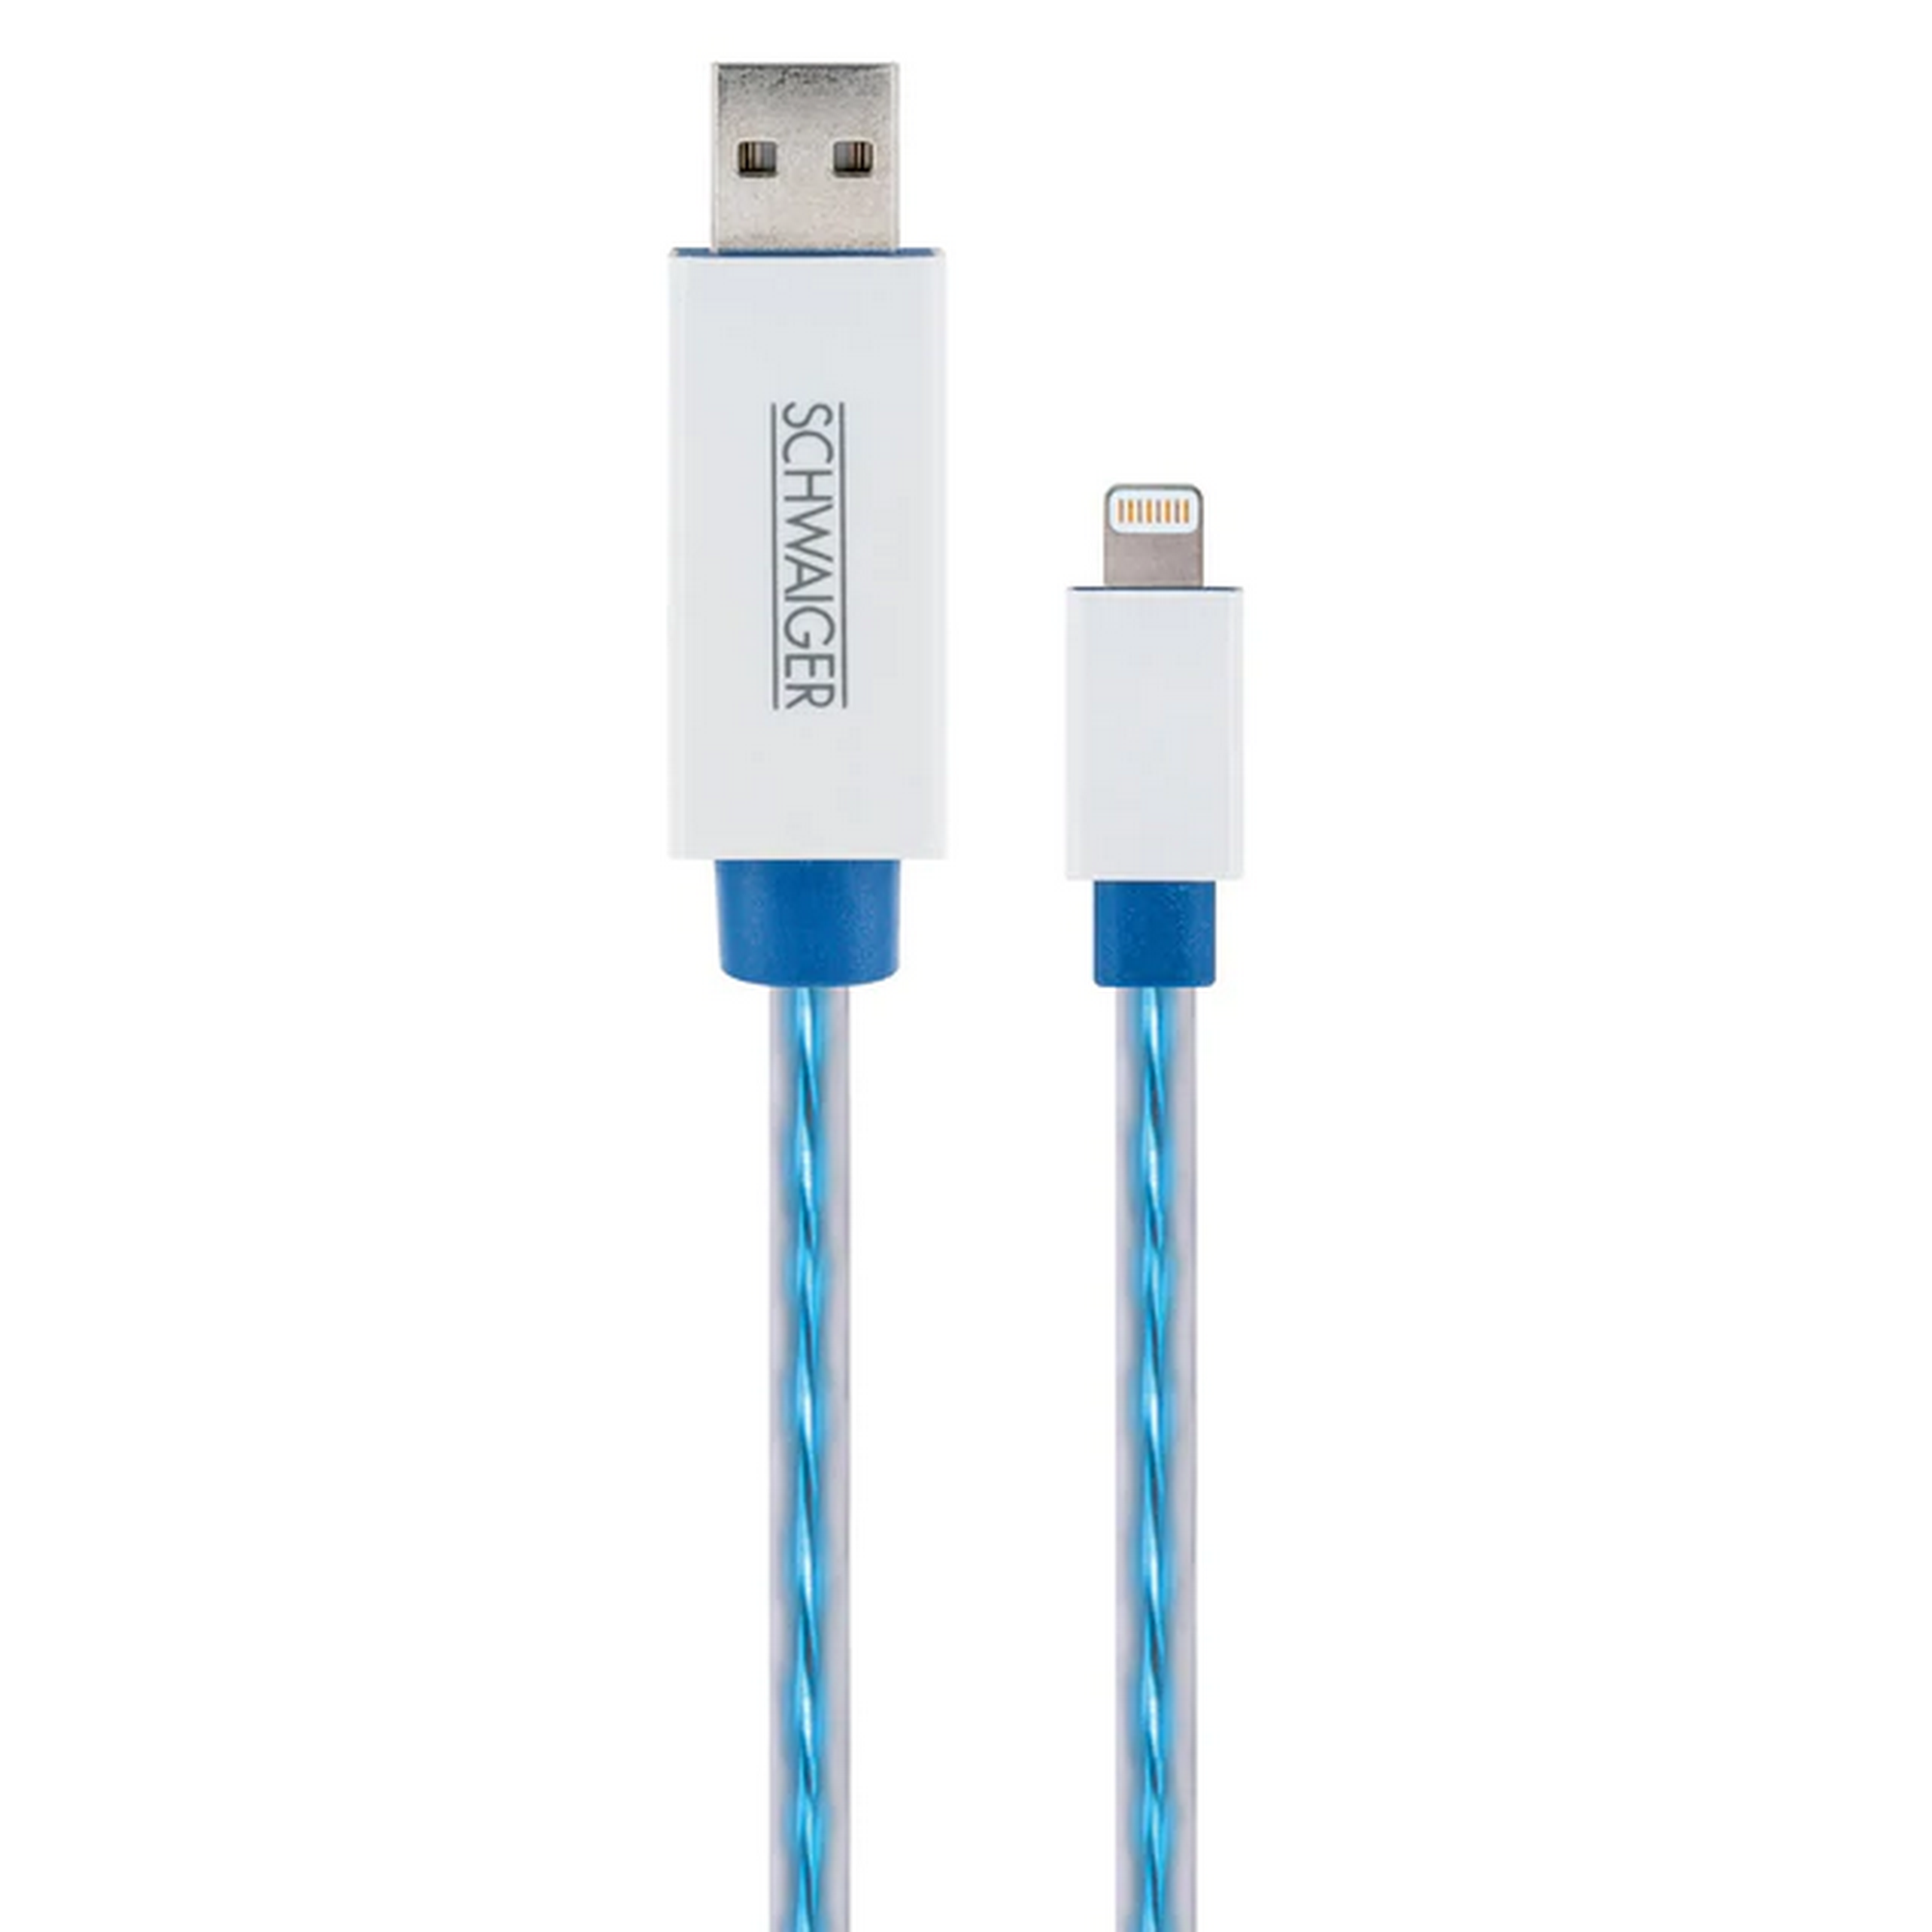 Sync- und Ladekabel Apple® Lightning 80 cm, blau leuchtend + product picture